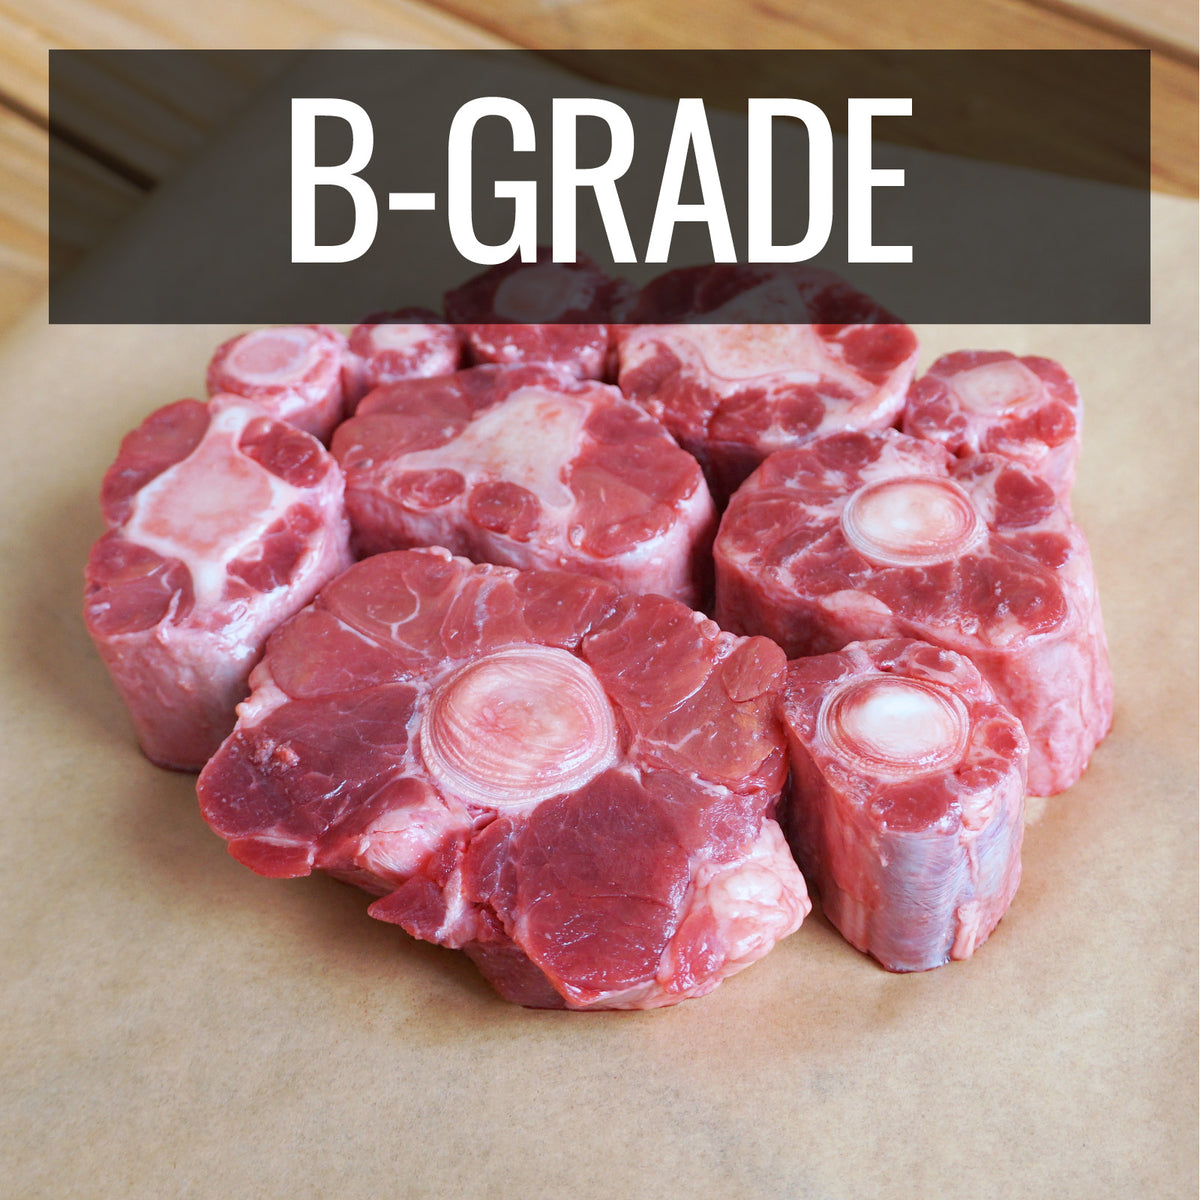 Grass-Fed Beef Oxtail / Tail Cuts B-Grade (500g) - Horizon Farms